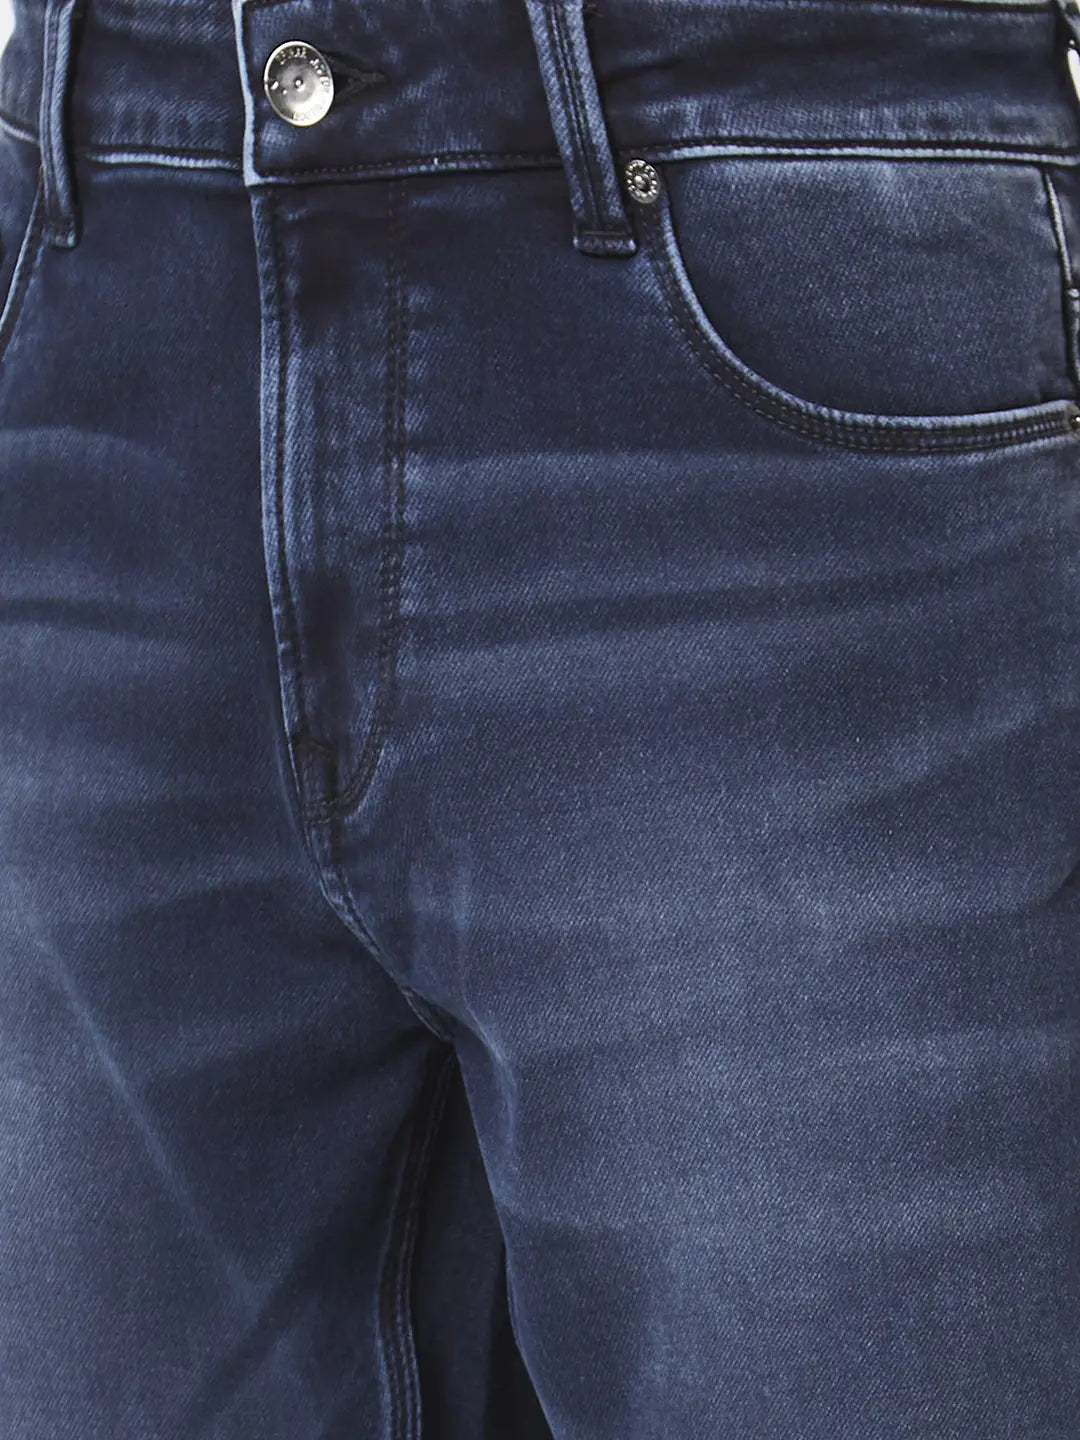 Spykar Men Black Indigo Cotton Stretch Comfort Fit Straigth Length Clean look Mid Rise Jeans (Ricardo)